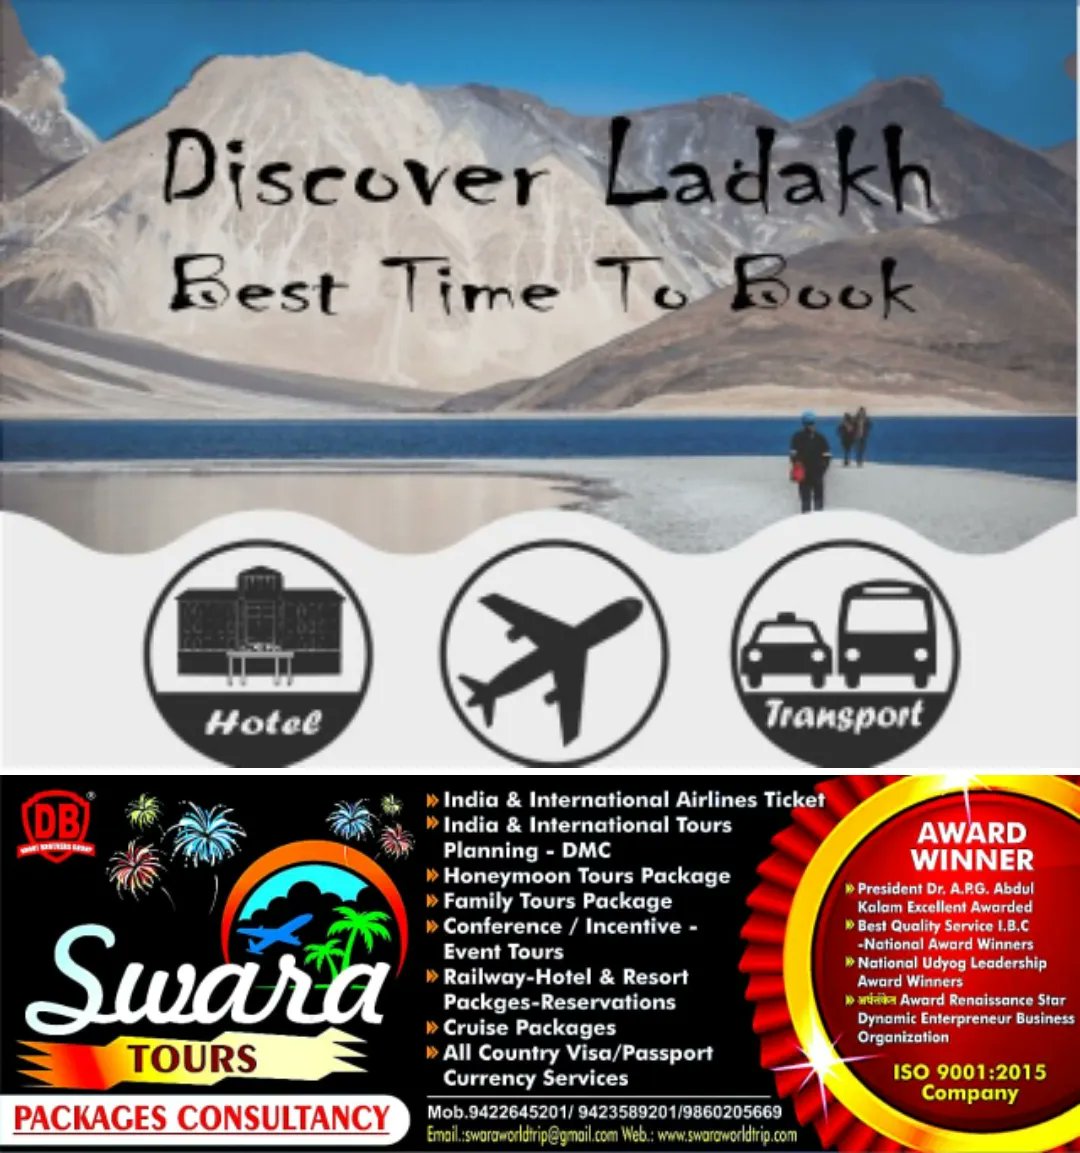 Best Time for Trip to Ladakh
Hurry Up
Book Your Ticket..

#triplecrown #traveledmonton #triplebshop #traveledtheworld #triplover #ladakhbiketrip #ladakhlove #swaraworldtrip #toursandtravels #trip